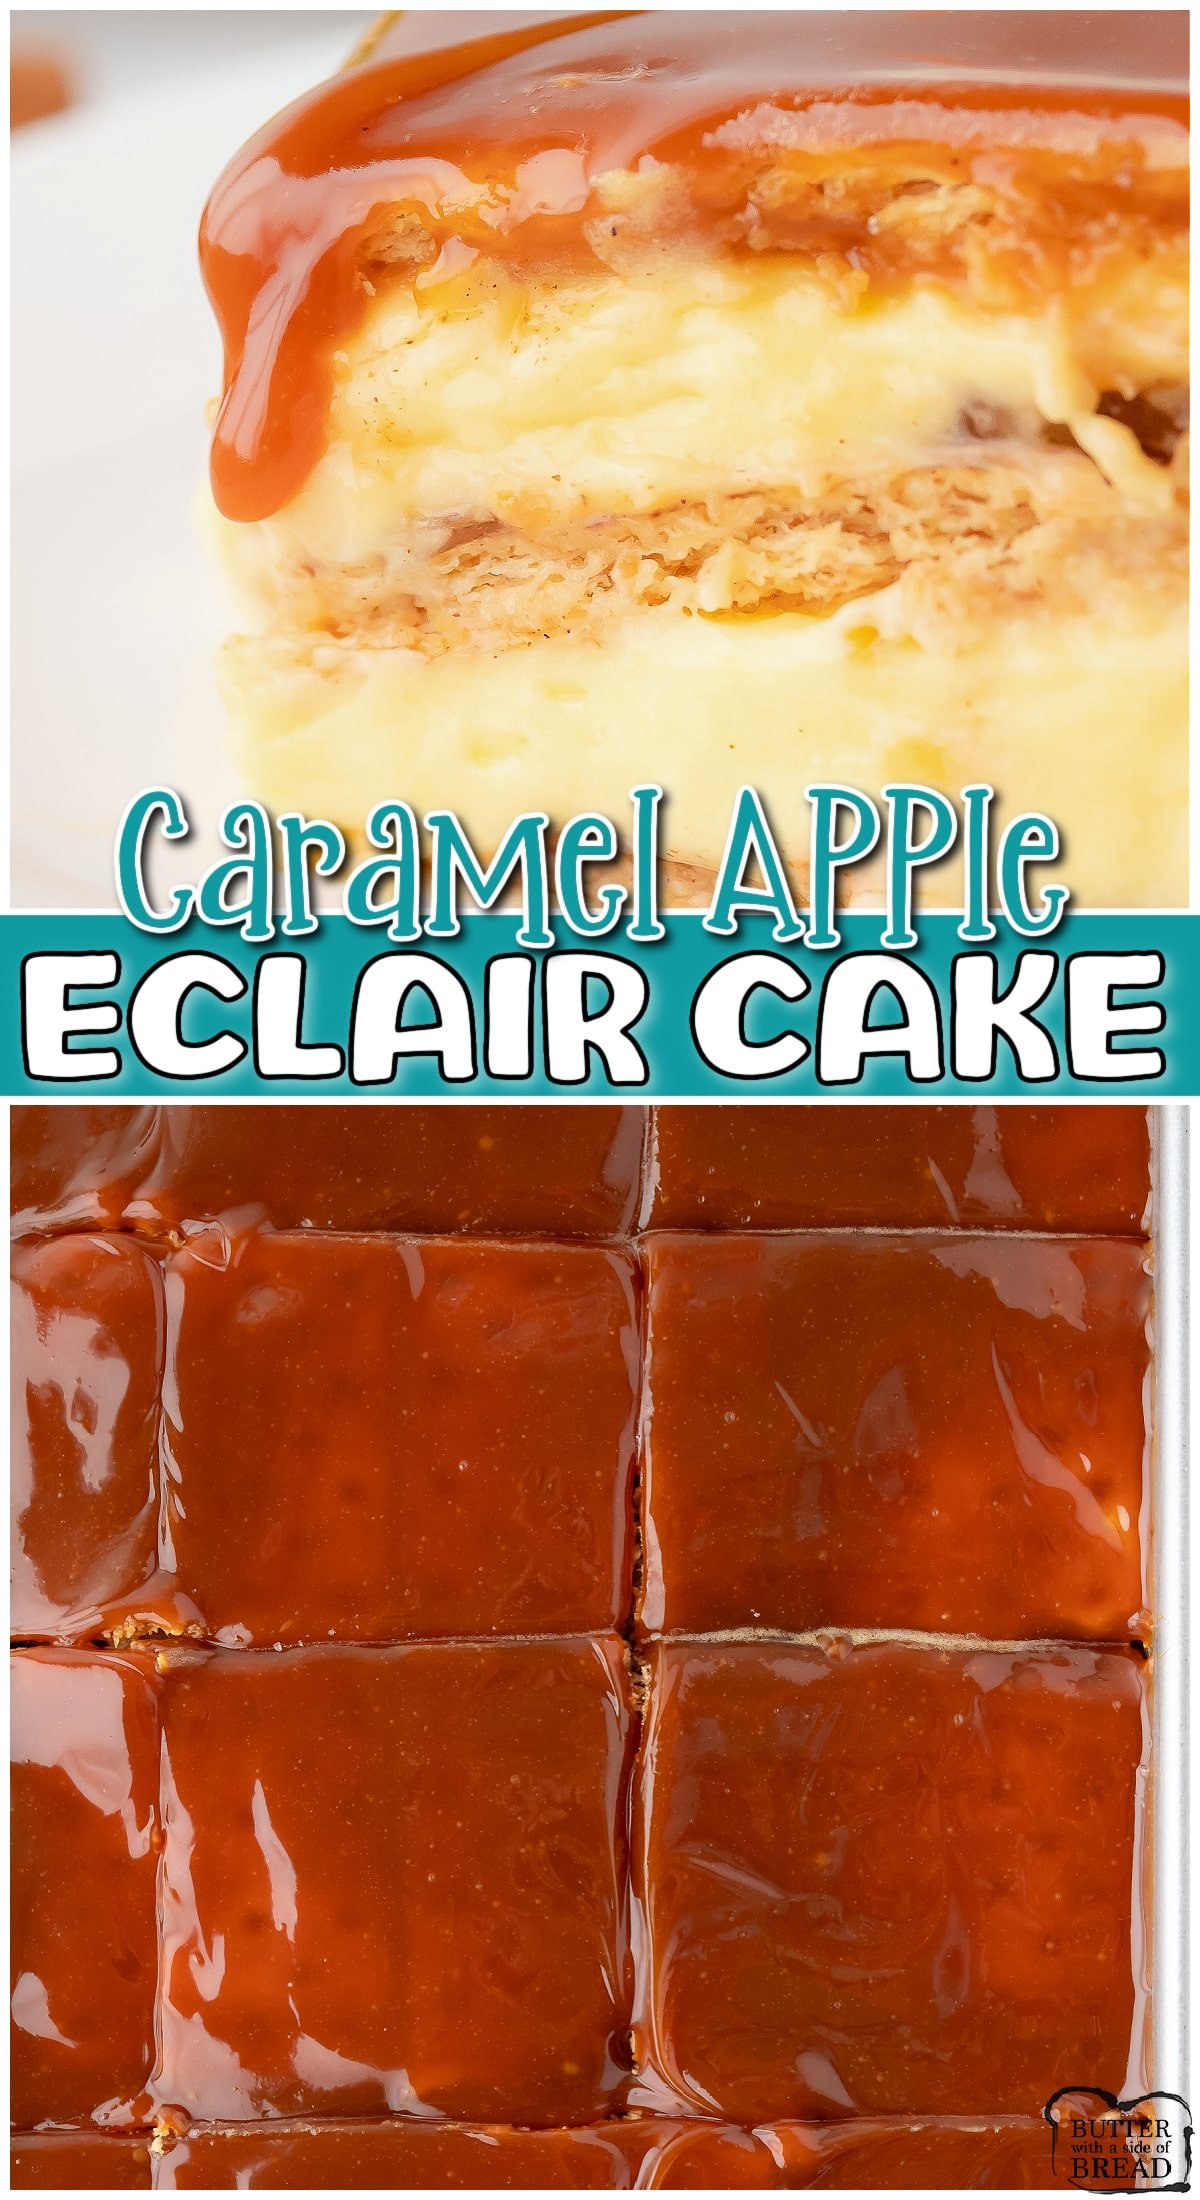 Caramel Apple Eclair Cake is a decadent, no-bake dessert made with graham crackers, spiced apple pie filling, caramel & sweet cream!